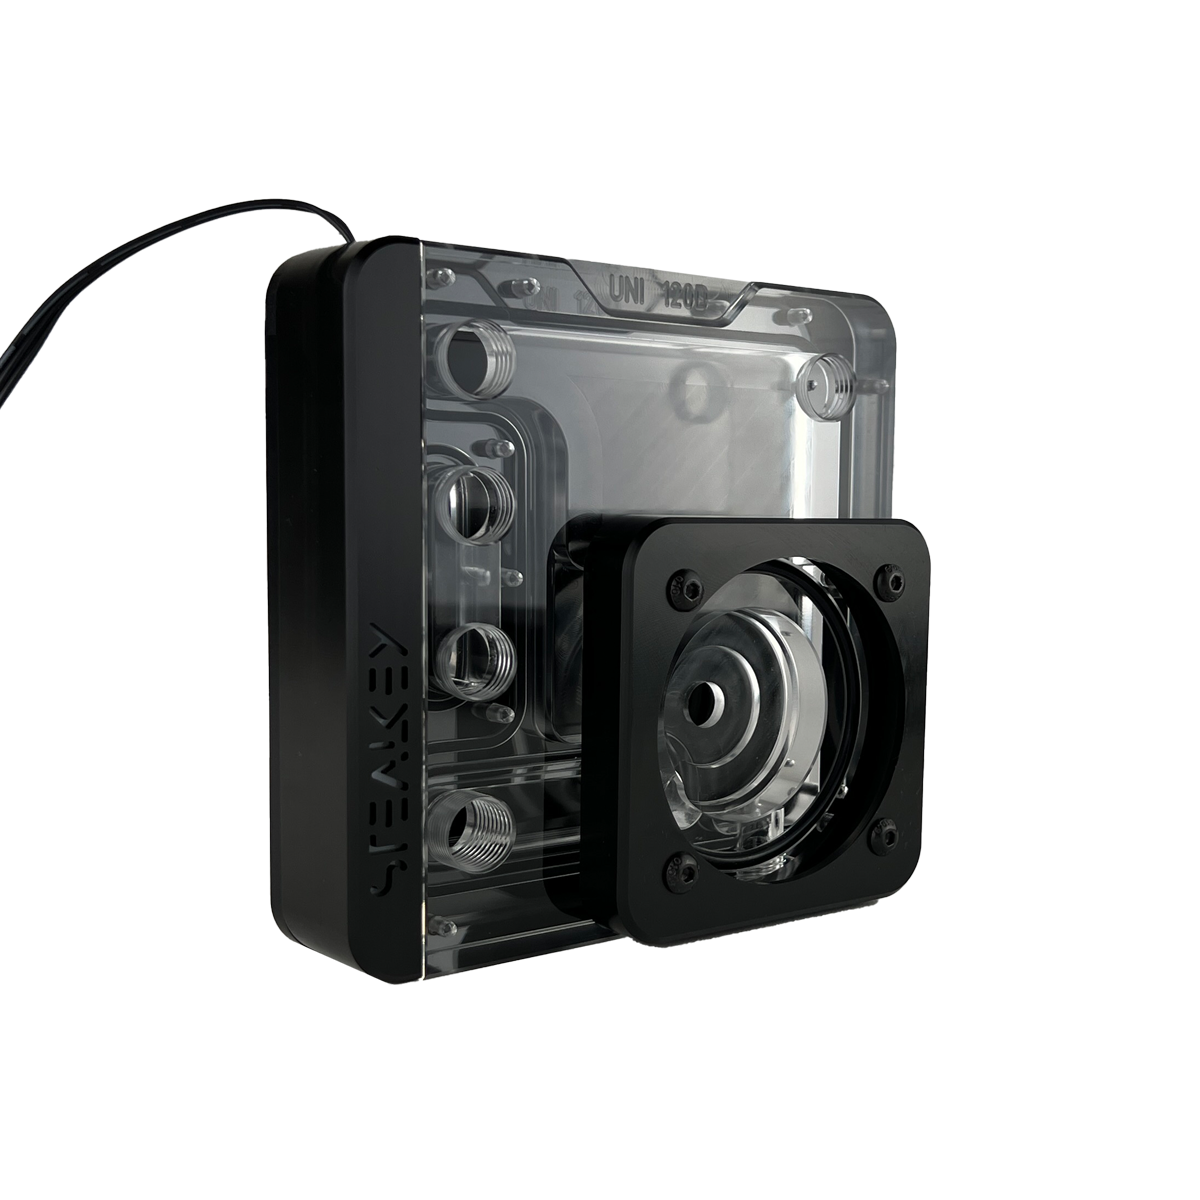 SK-UNI 120D Distroplate D-RGB - Black Edition